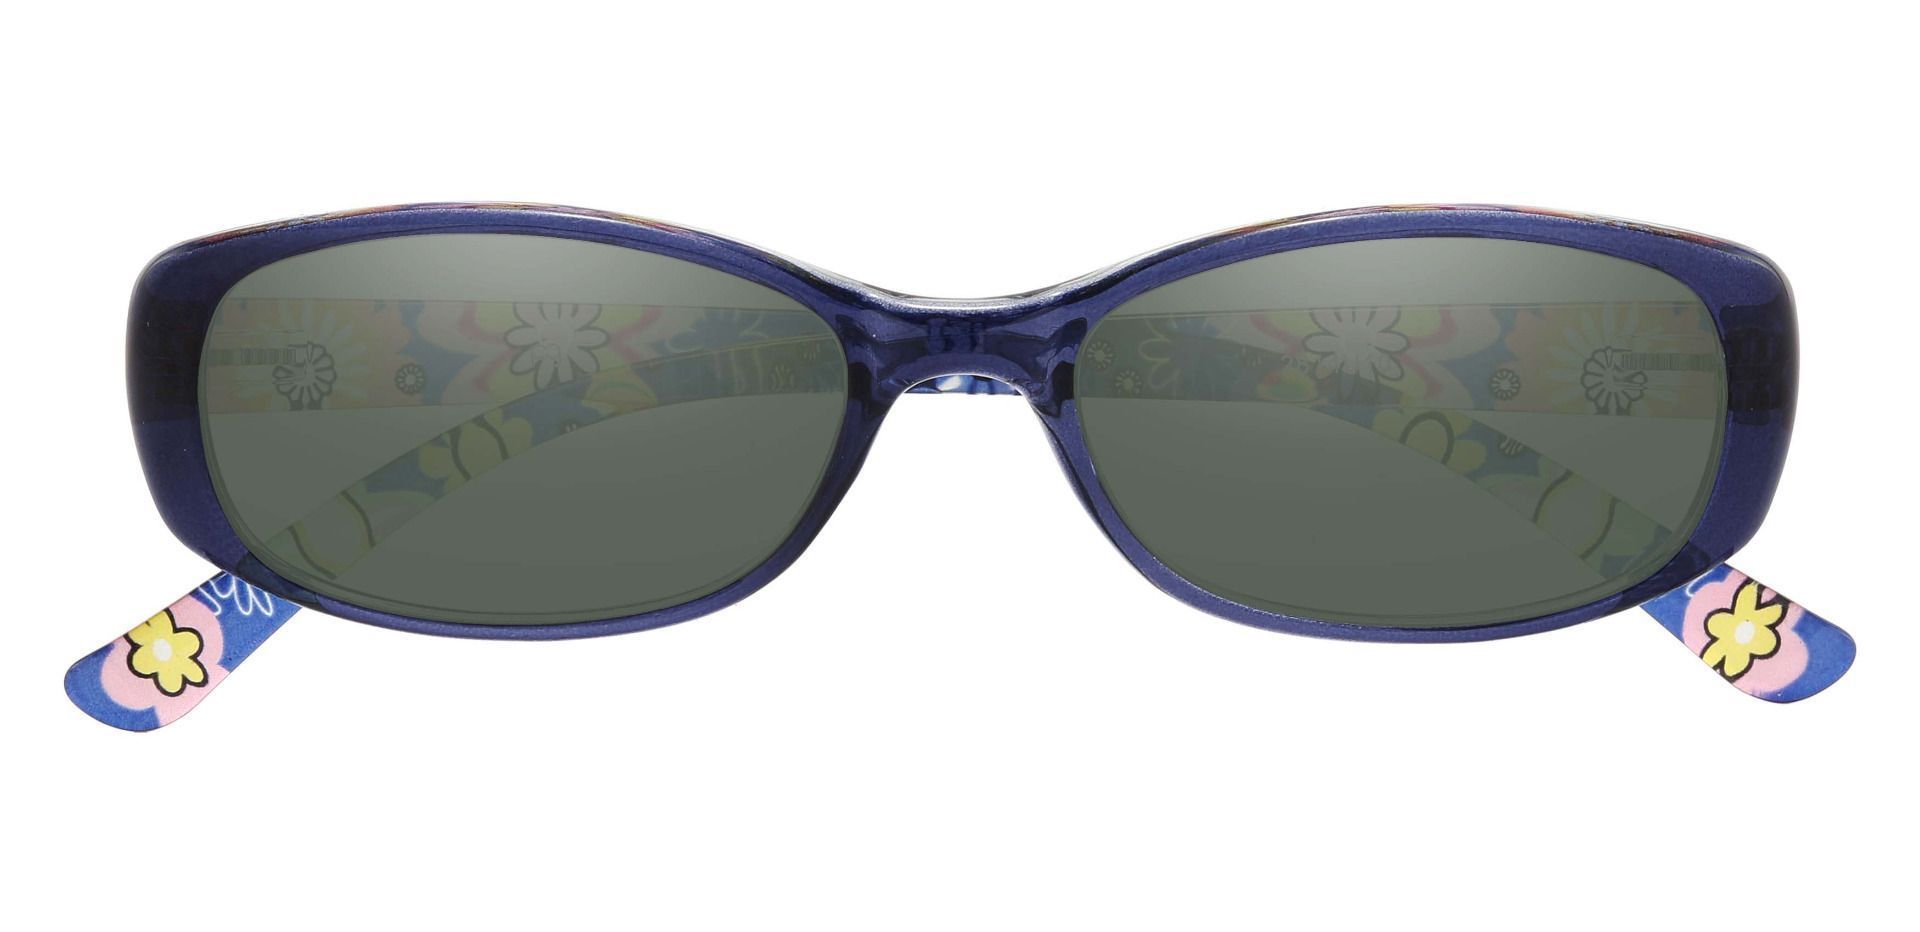 Bethesda Rectangle Non-Rx Sunglasses - Blue Frame With Green Lenses